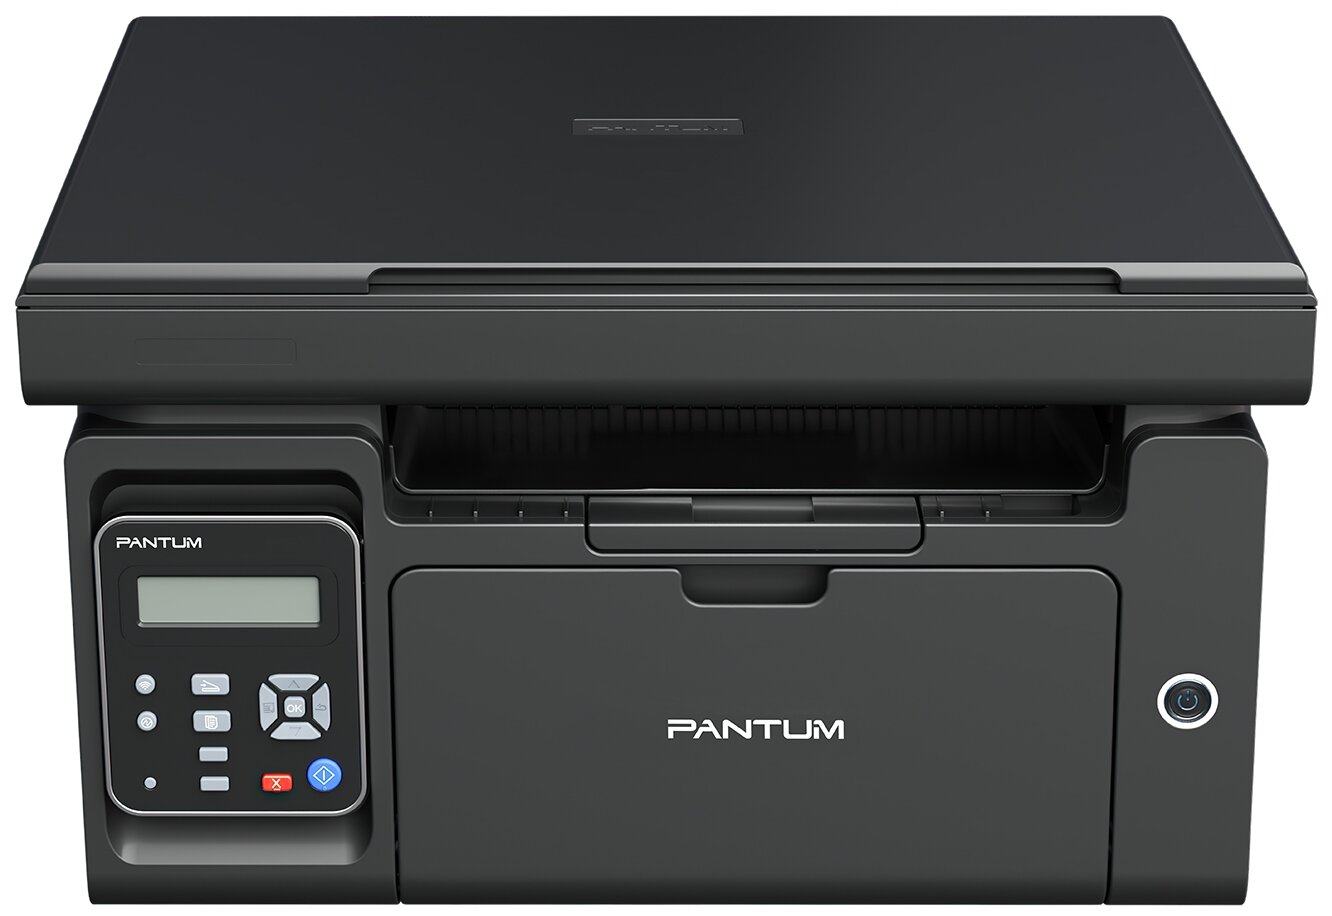 Pantum M6500 МФУ, Mono laser, C P S, 22 стр мин, 1200 x 1200 dpi, 128Мб RAM, лоток 150 стр, USB, черный корпус